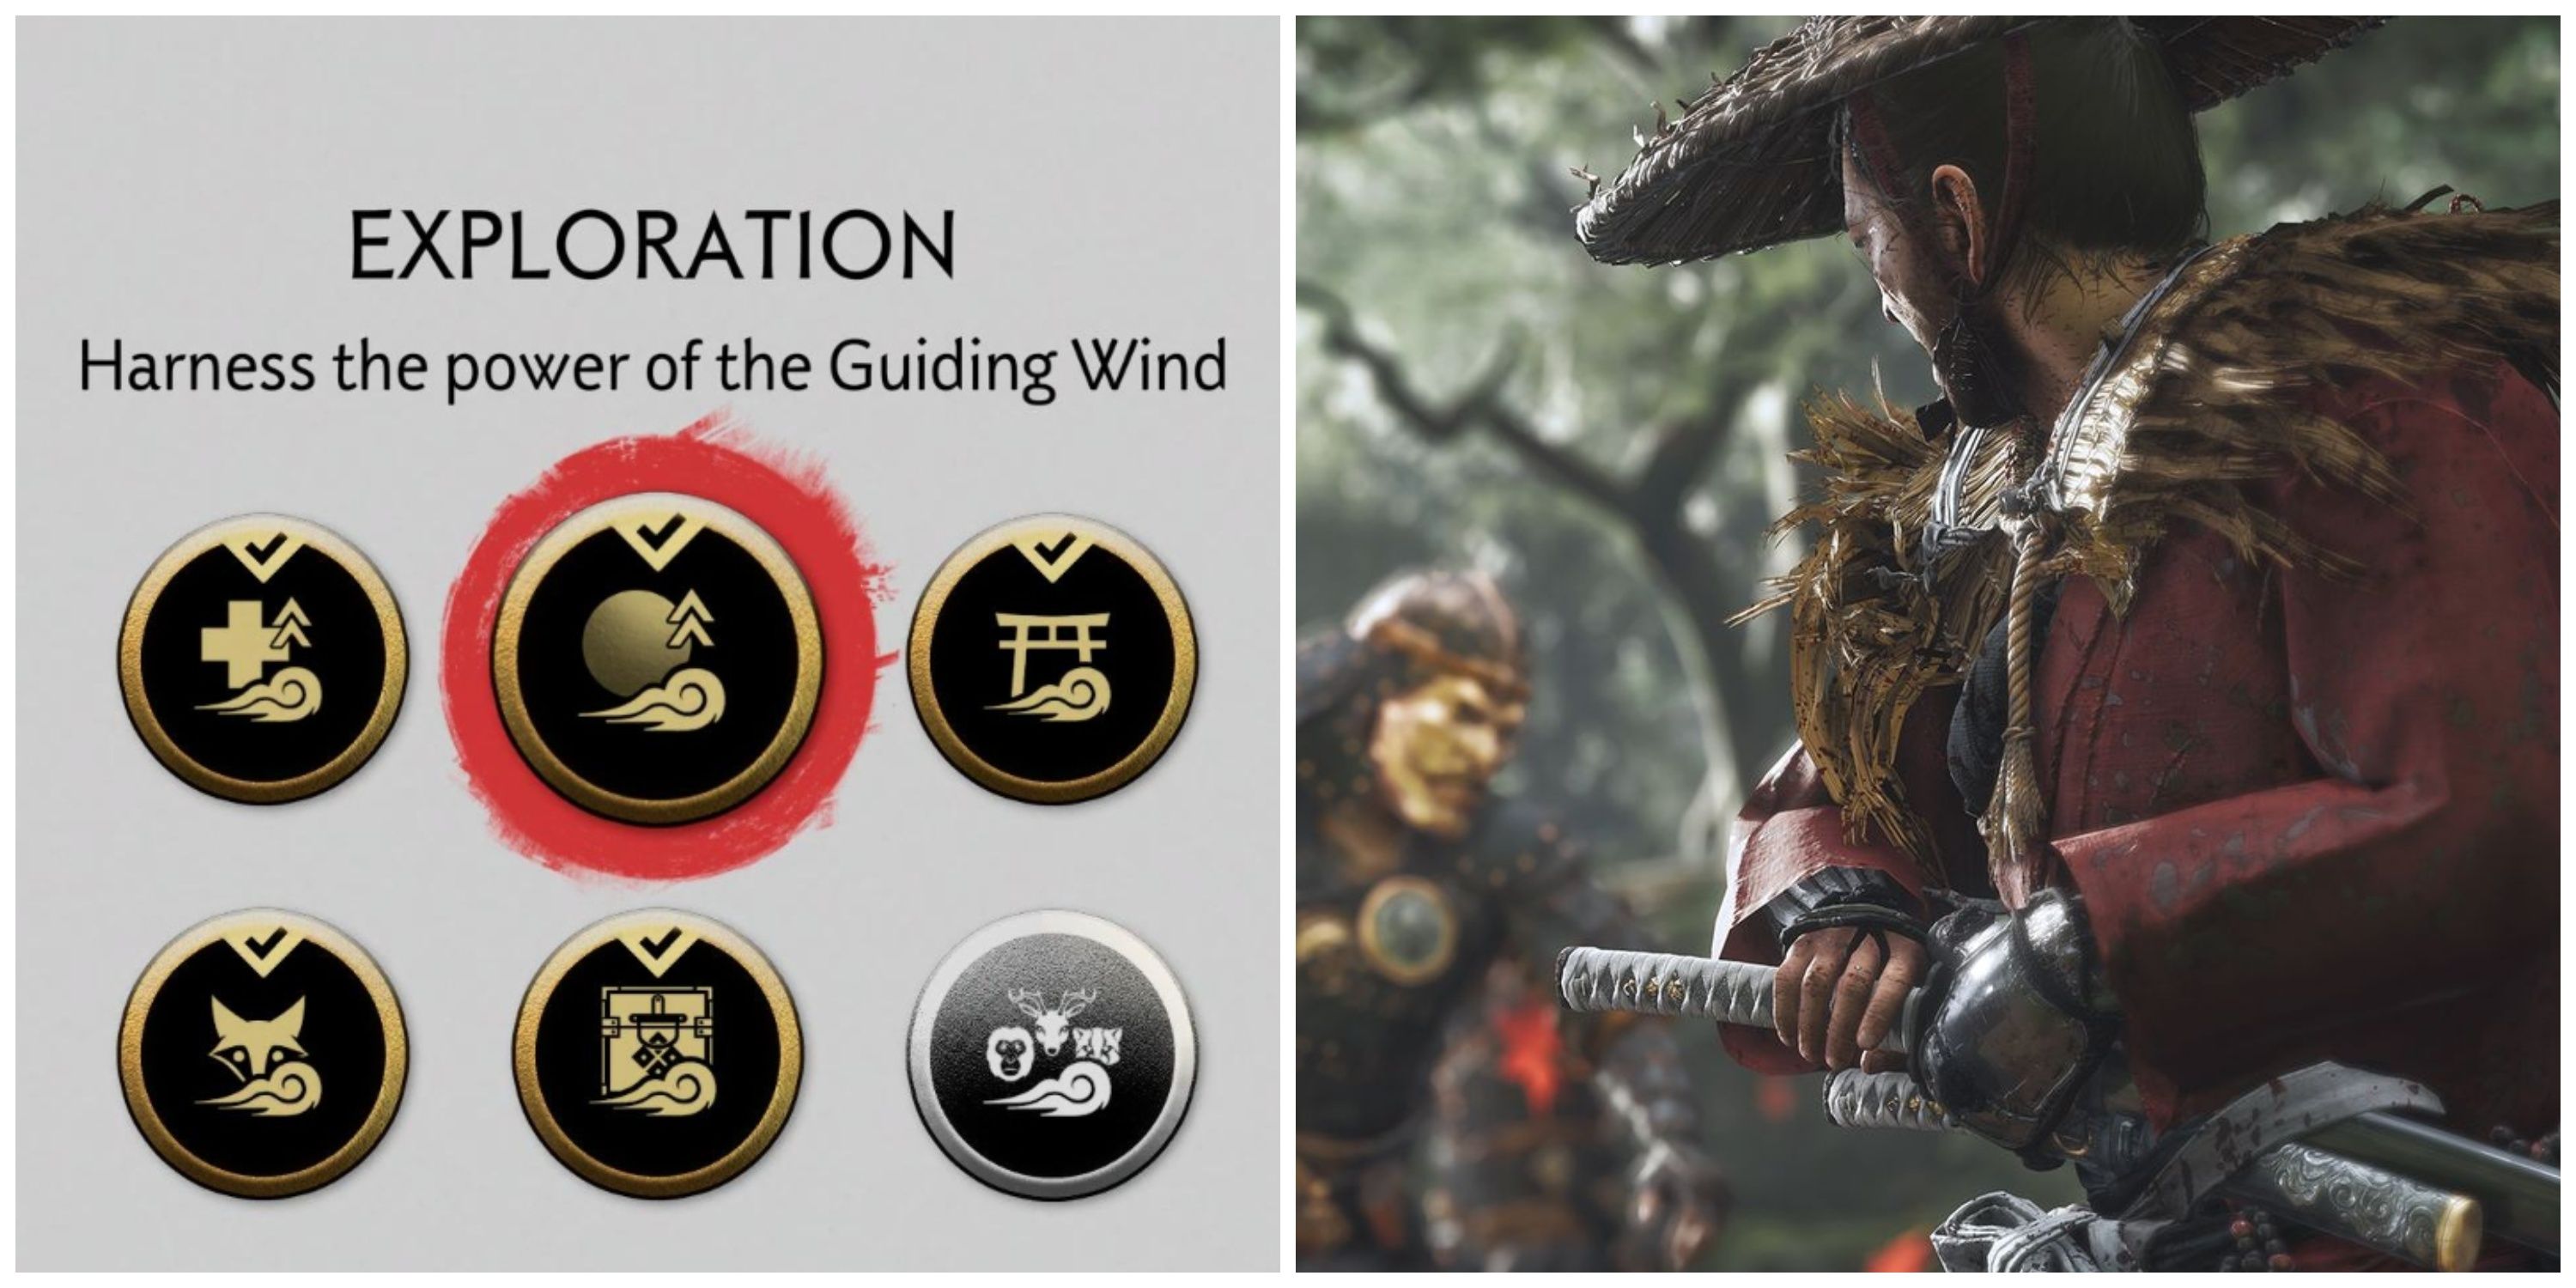 samurai techniques and jin sakai